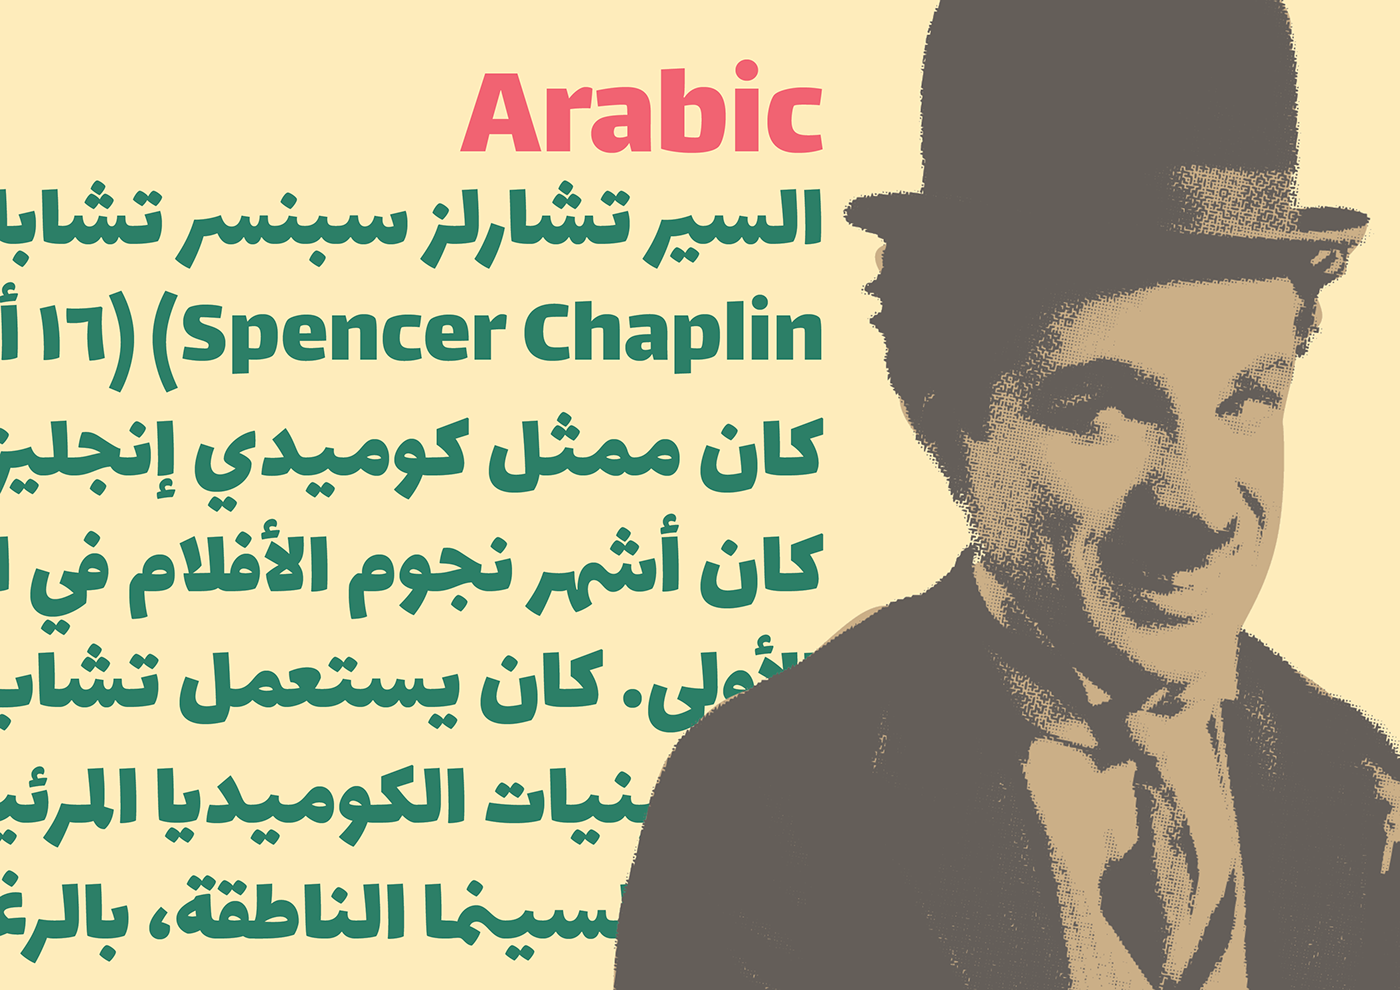 Arabic Typeface arabic font Persian Typeface Persian font Lalezar font typeface design multi-script typeface multilingual typeface Google Font Libre font Free font Latin Typeface latin font